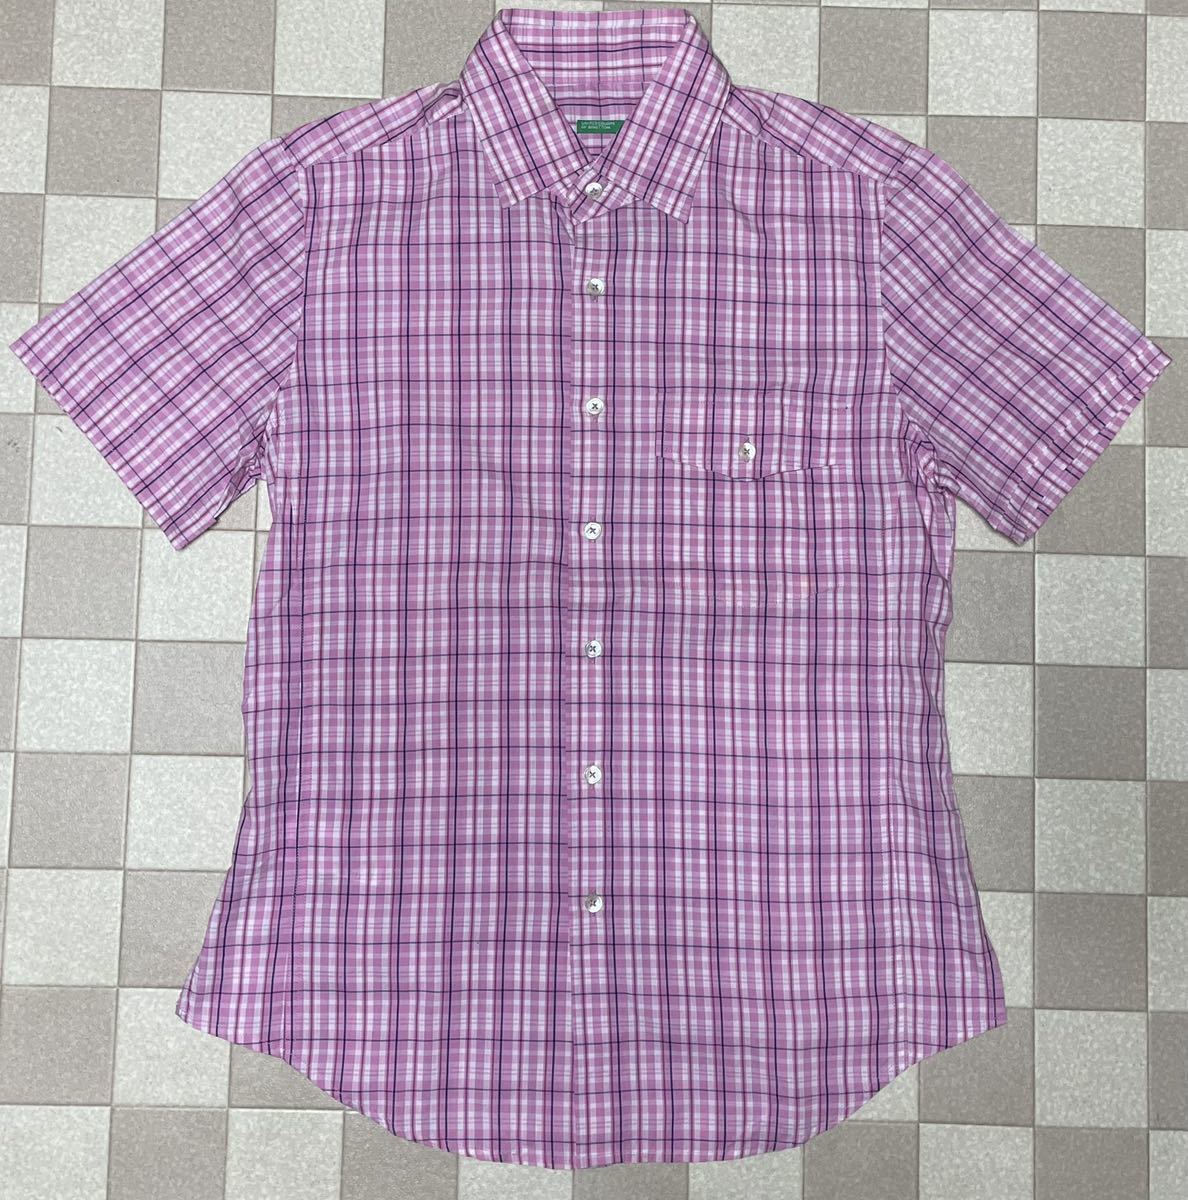 BENETTON Benetton M size pink series check pattern short sleeves shirt men's wear 